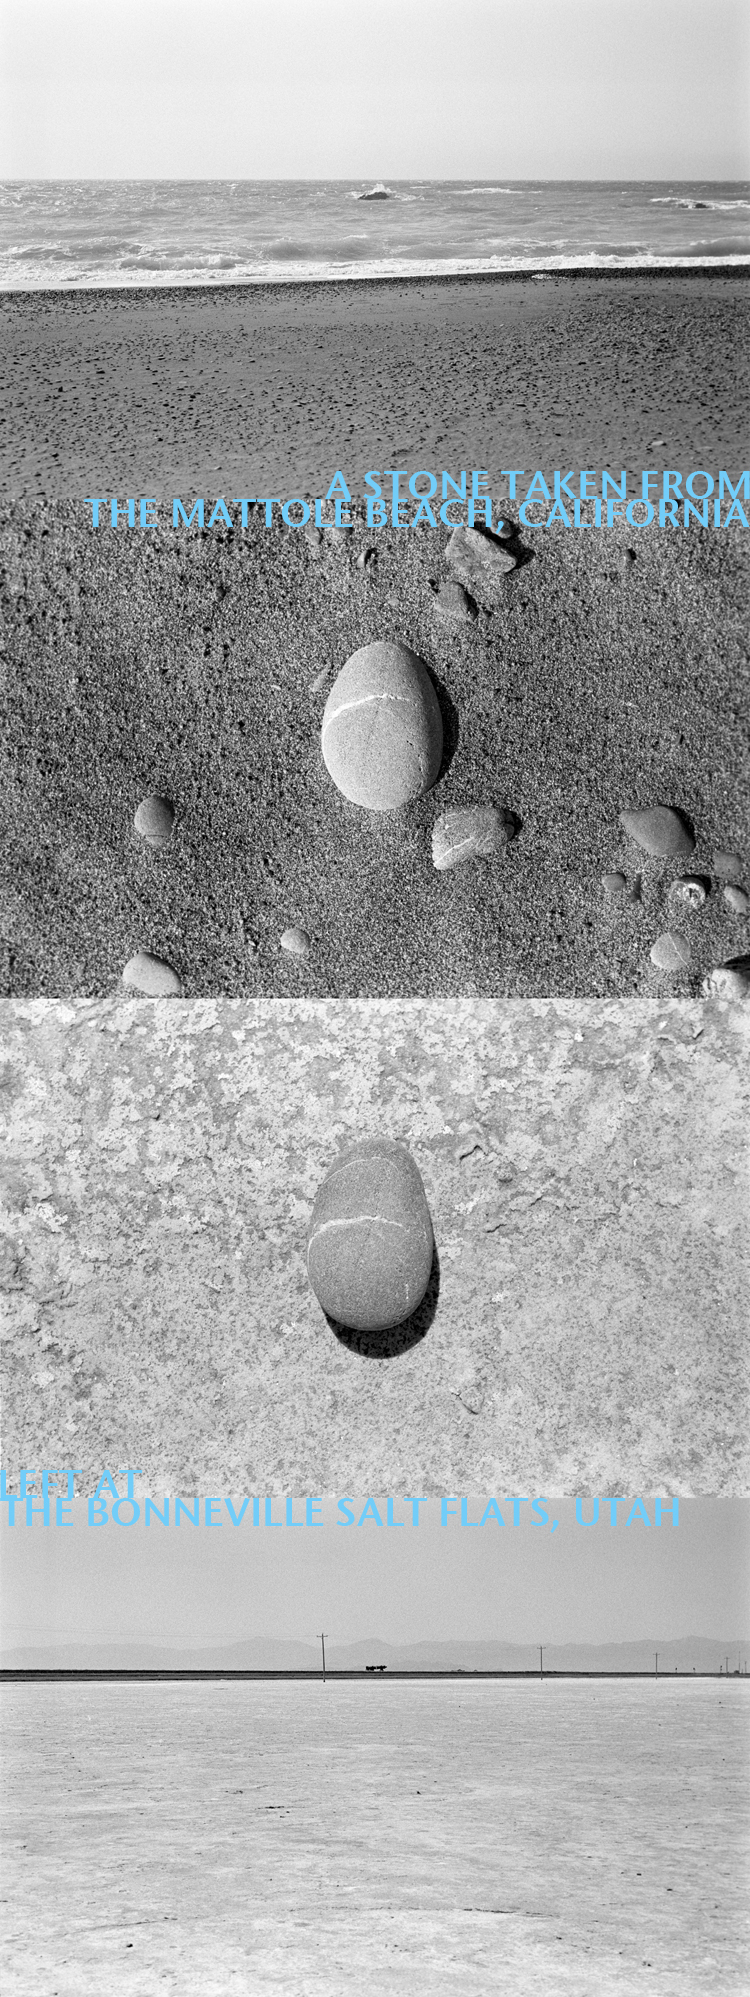 A stone taken from the Mattole Beach, California, left at the Bonneville Salt Flats, Utah.